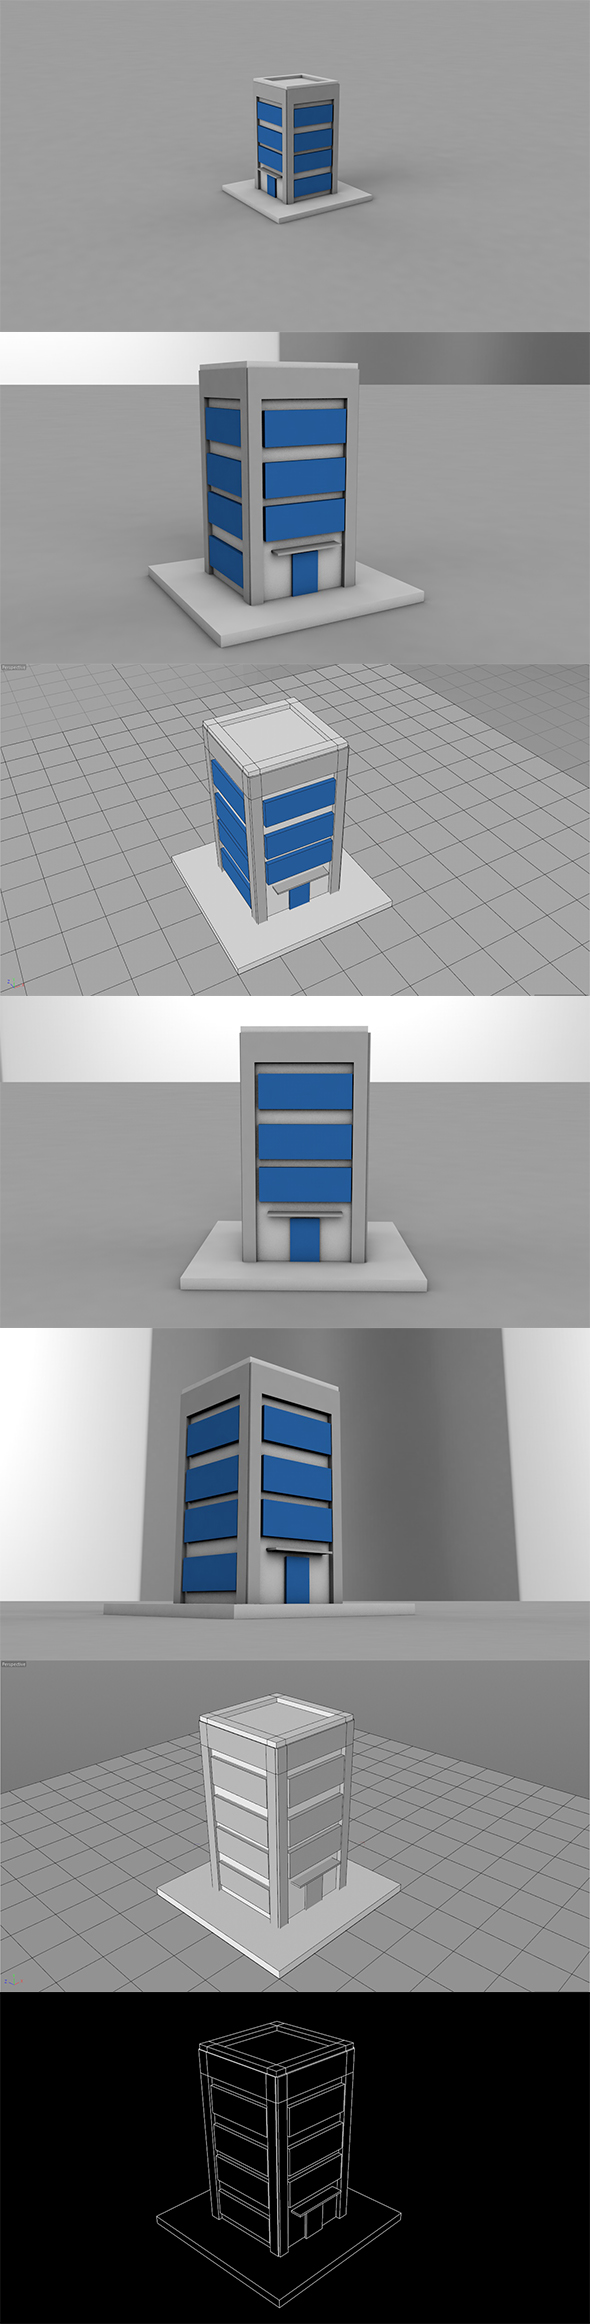 3D Building Icon - 3Docean 24878287